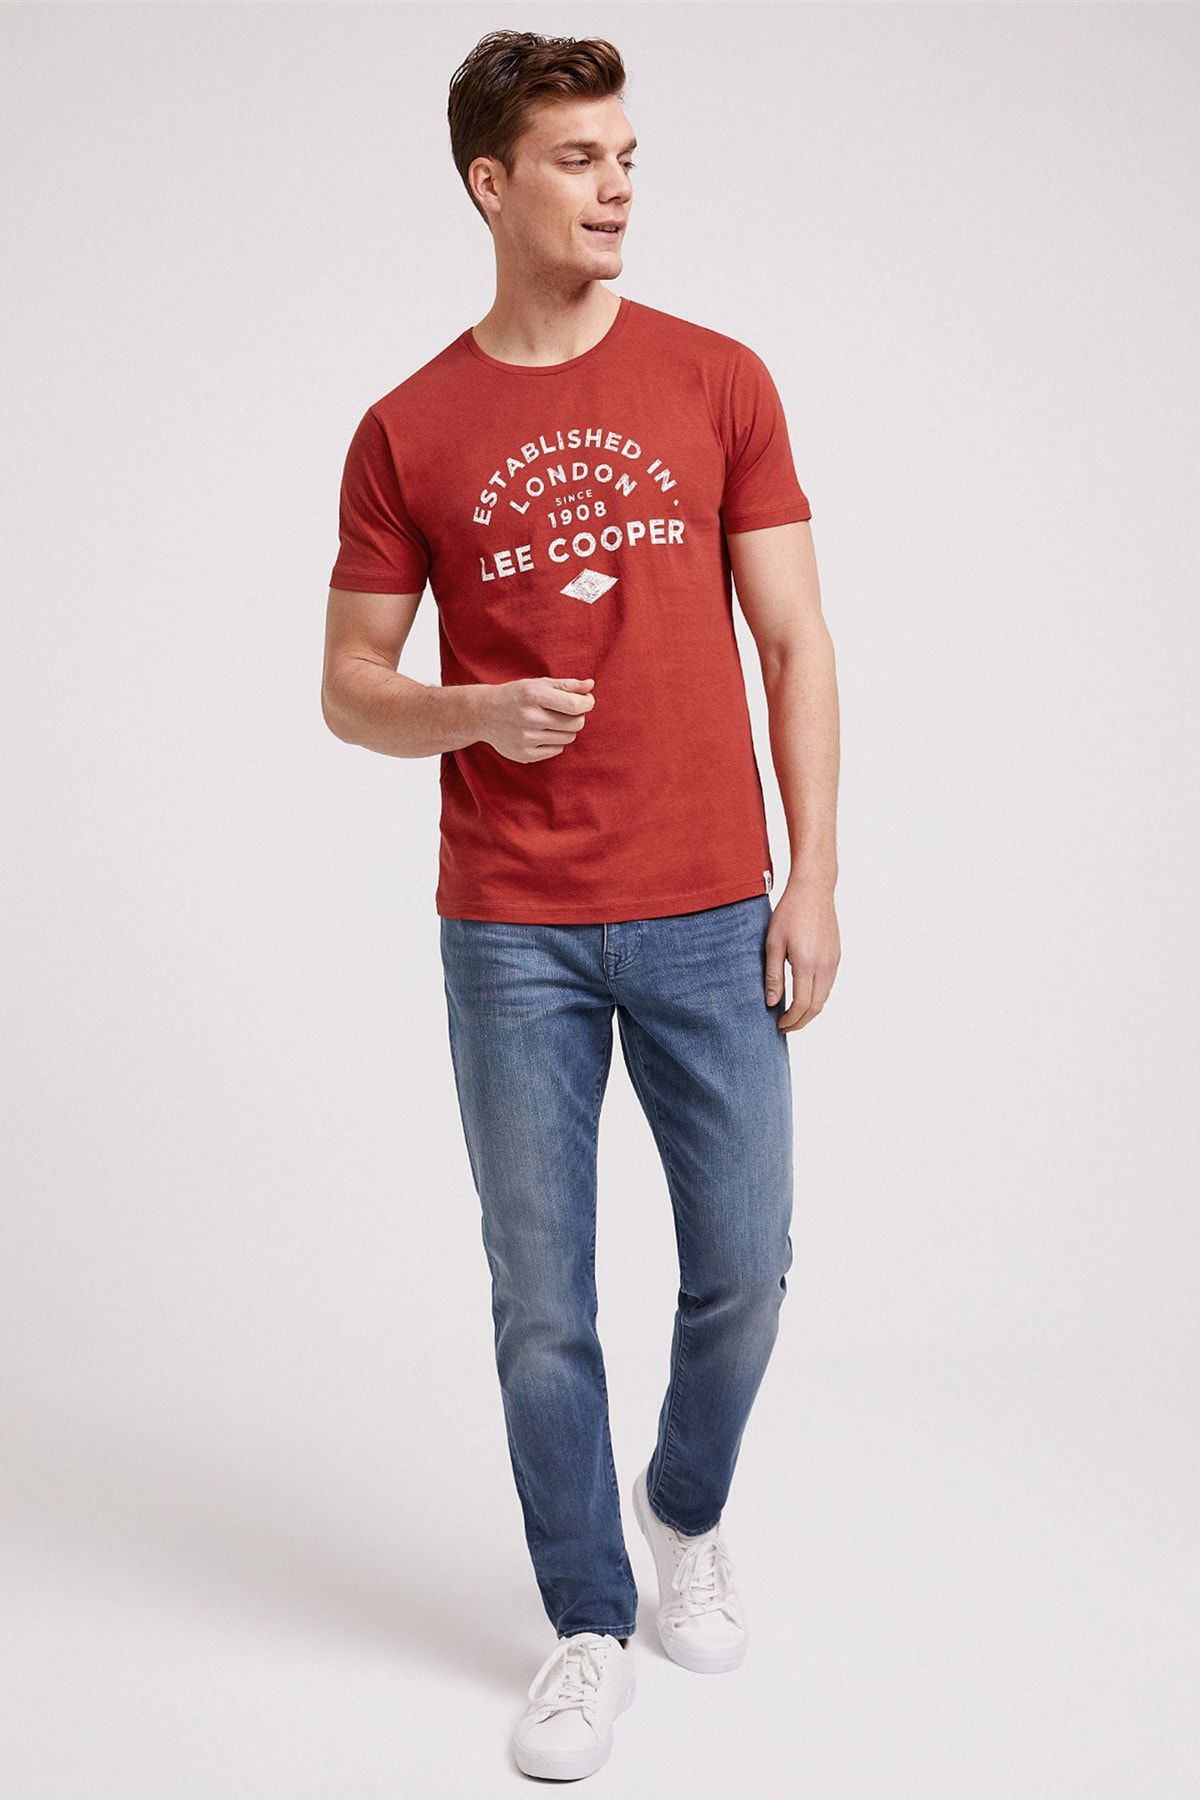 Lee Cooper Erkek Established O Yaka T-Shirt Bordo 202 LCM 242010